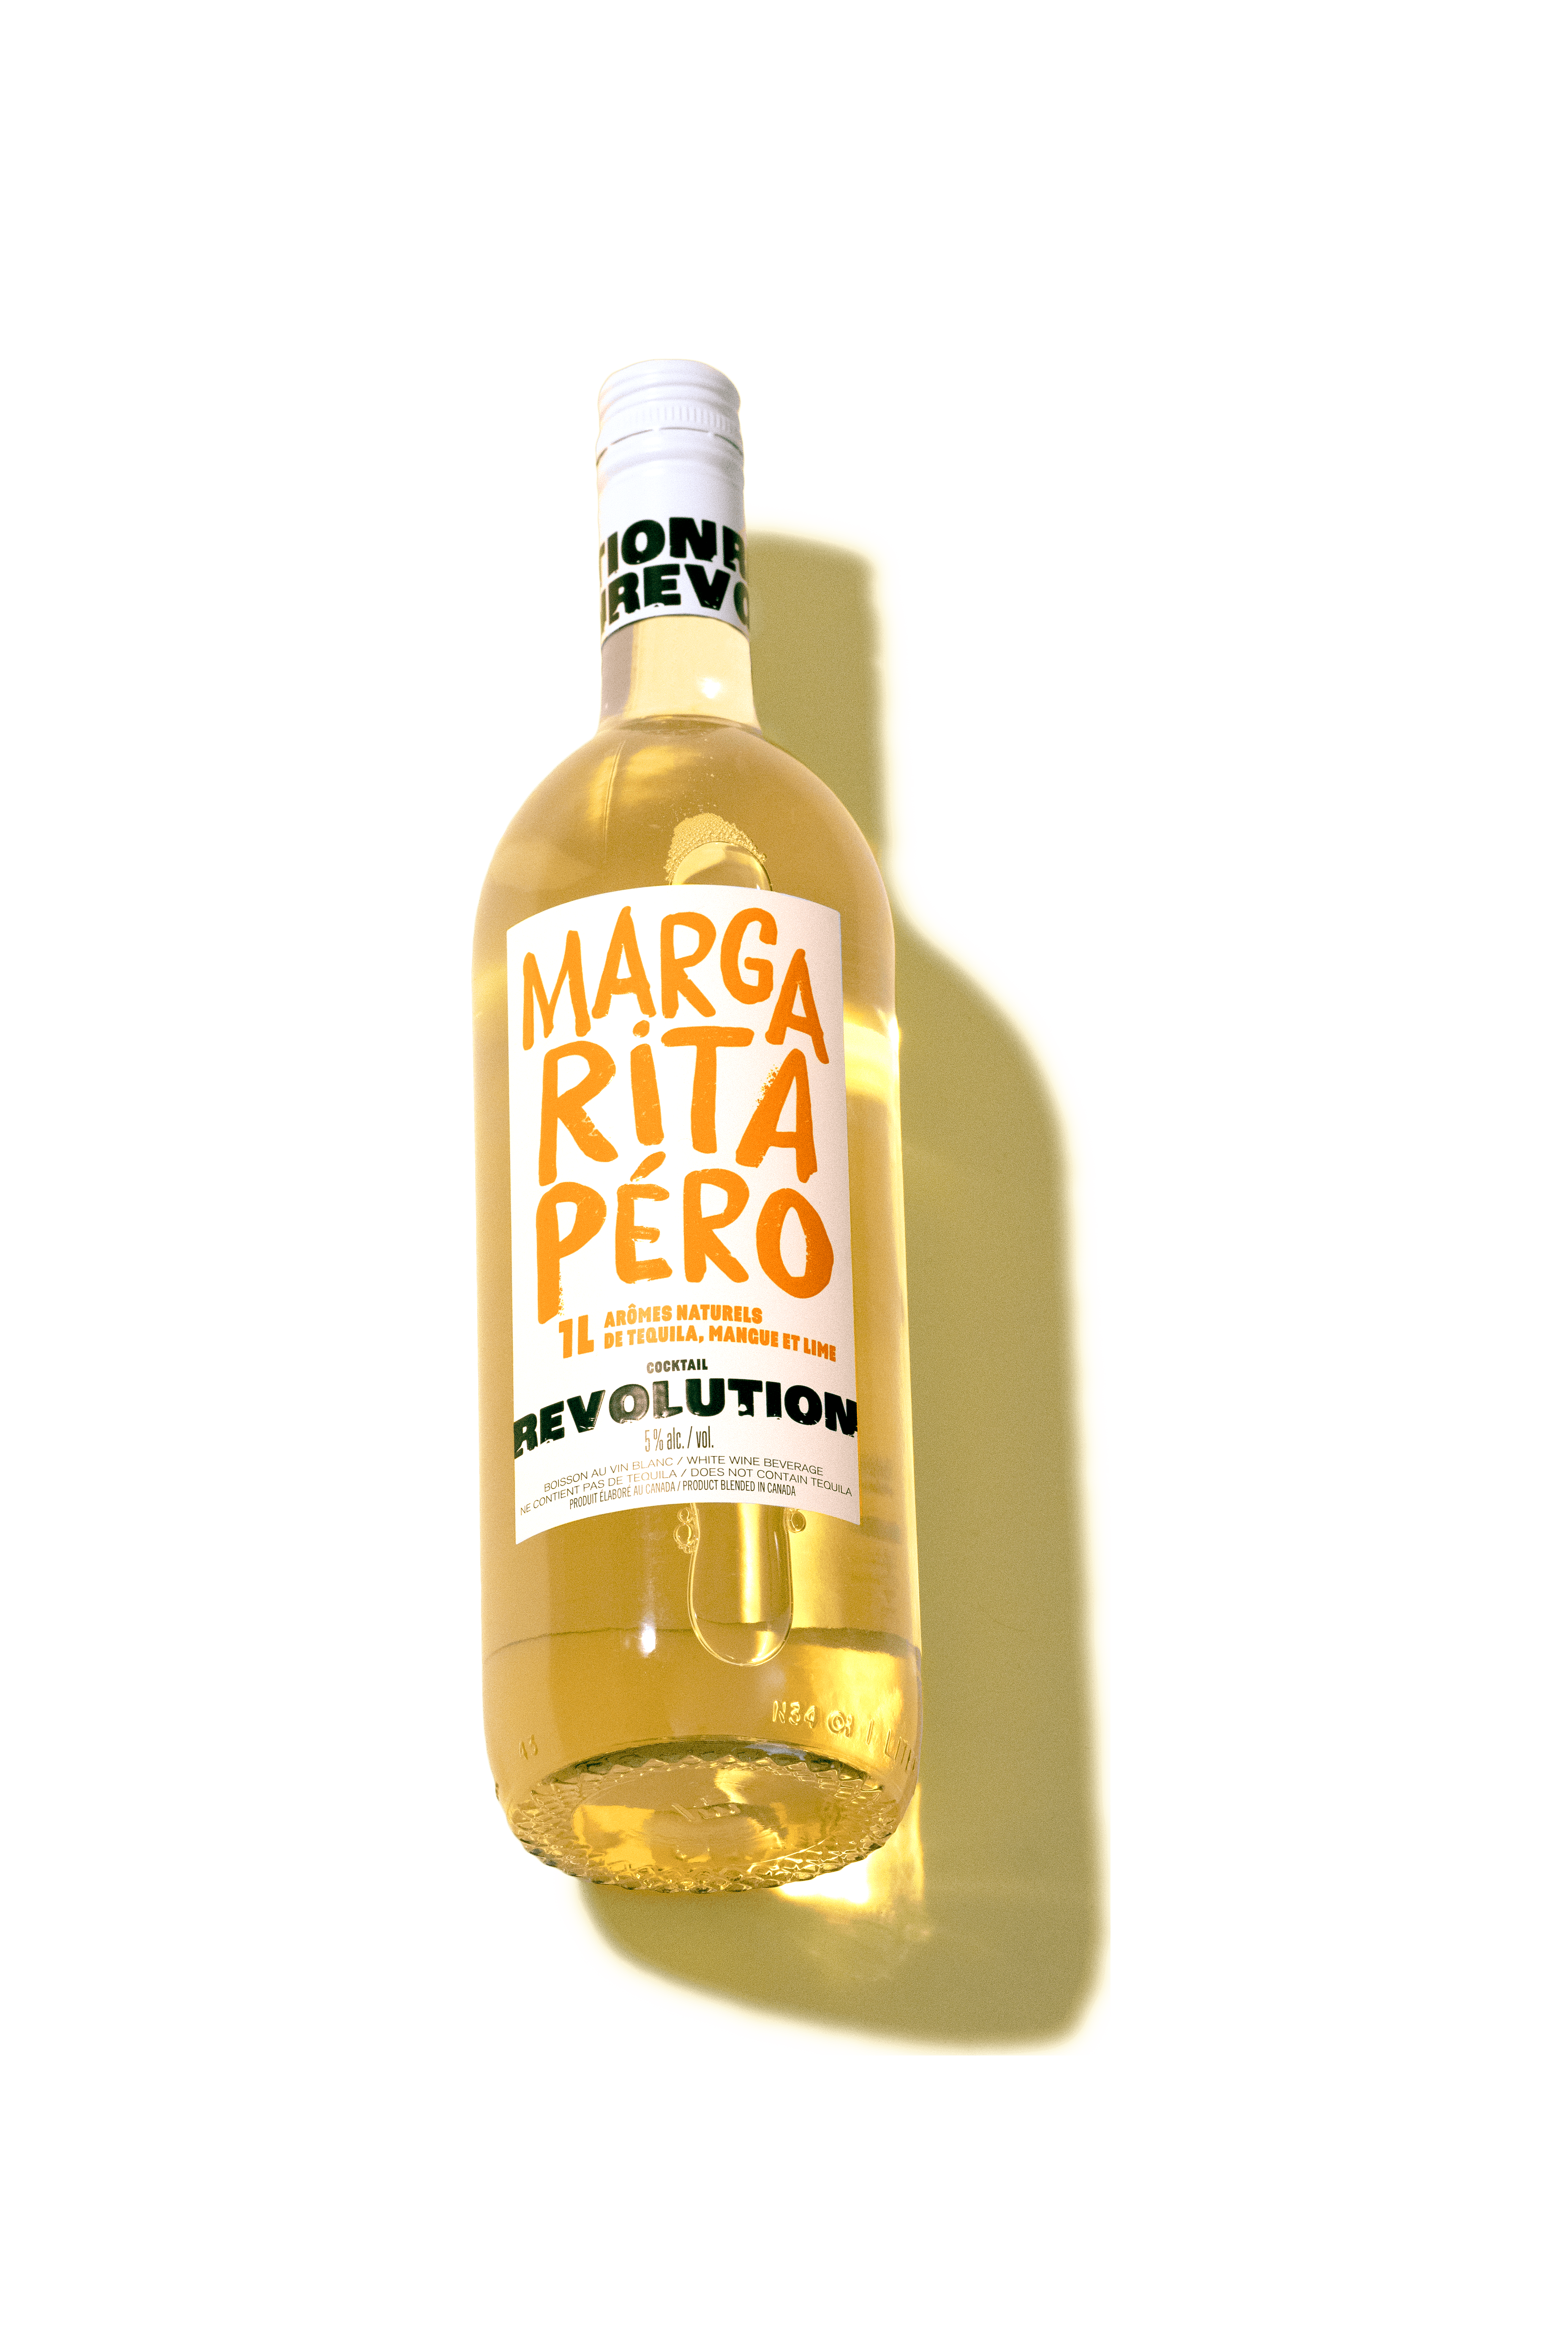 bouteille de MargaritApero